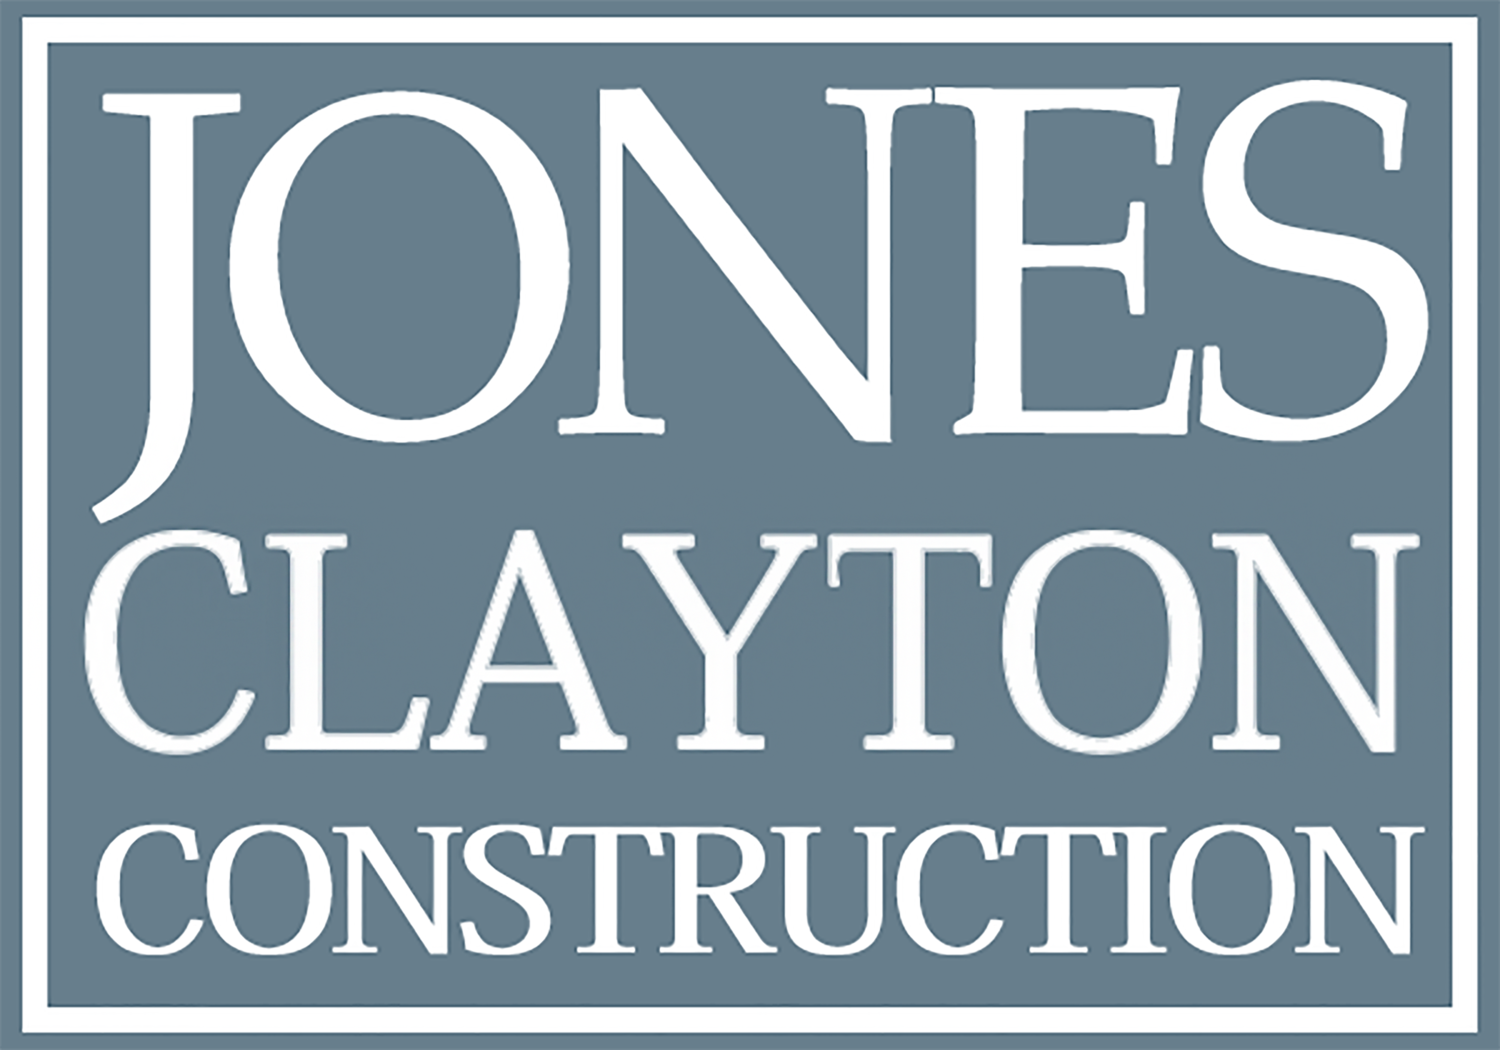 Jones Clayton Construction